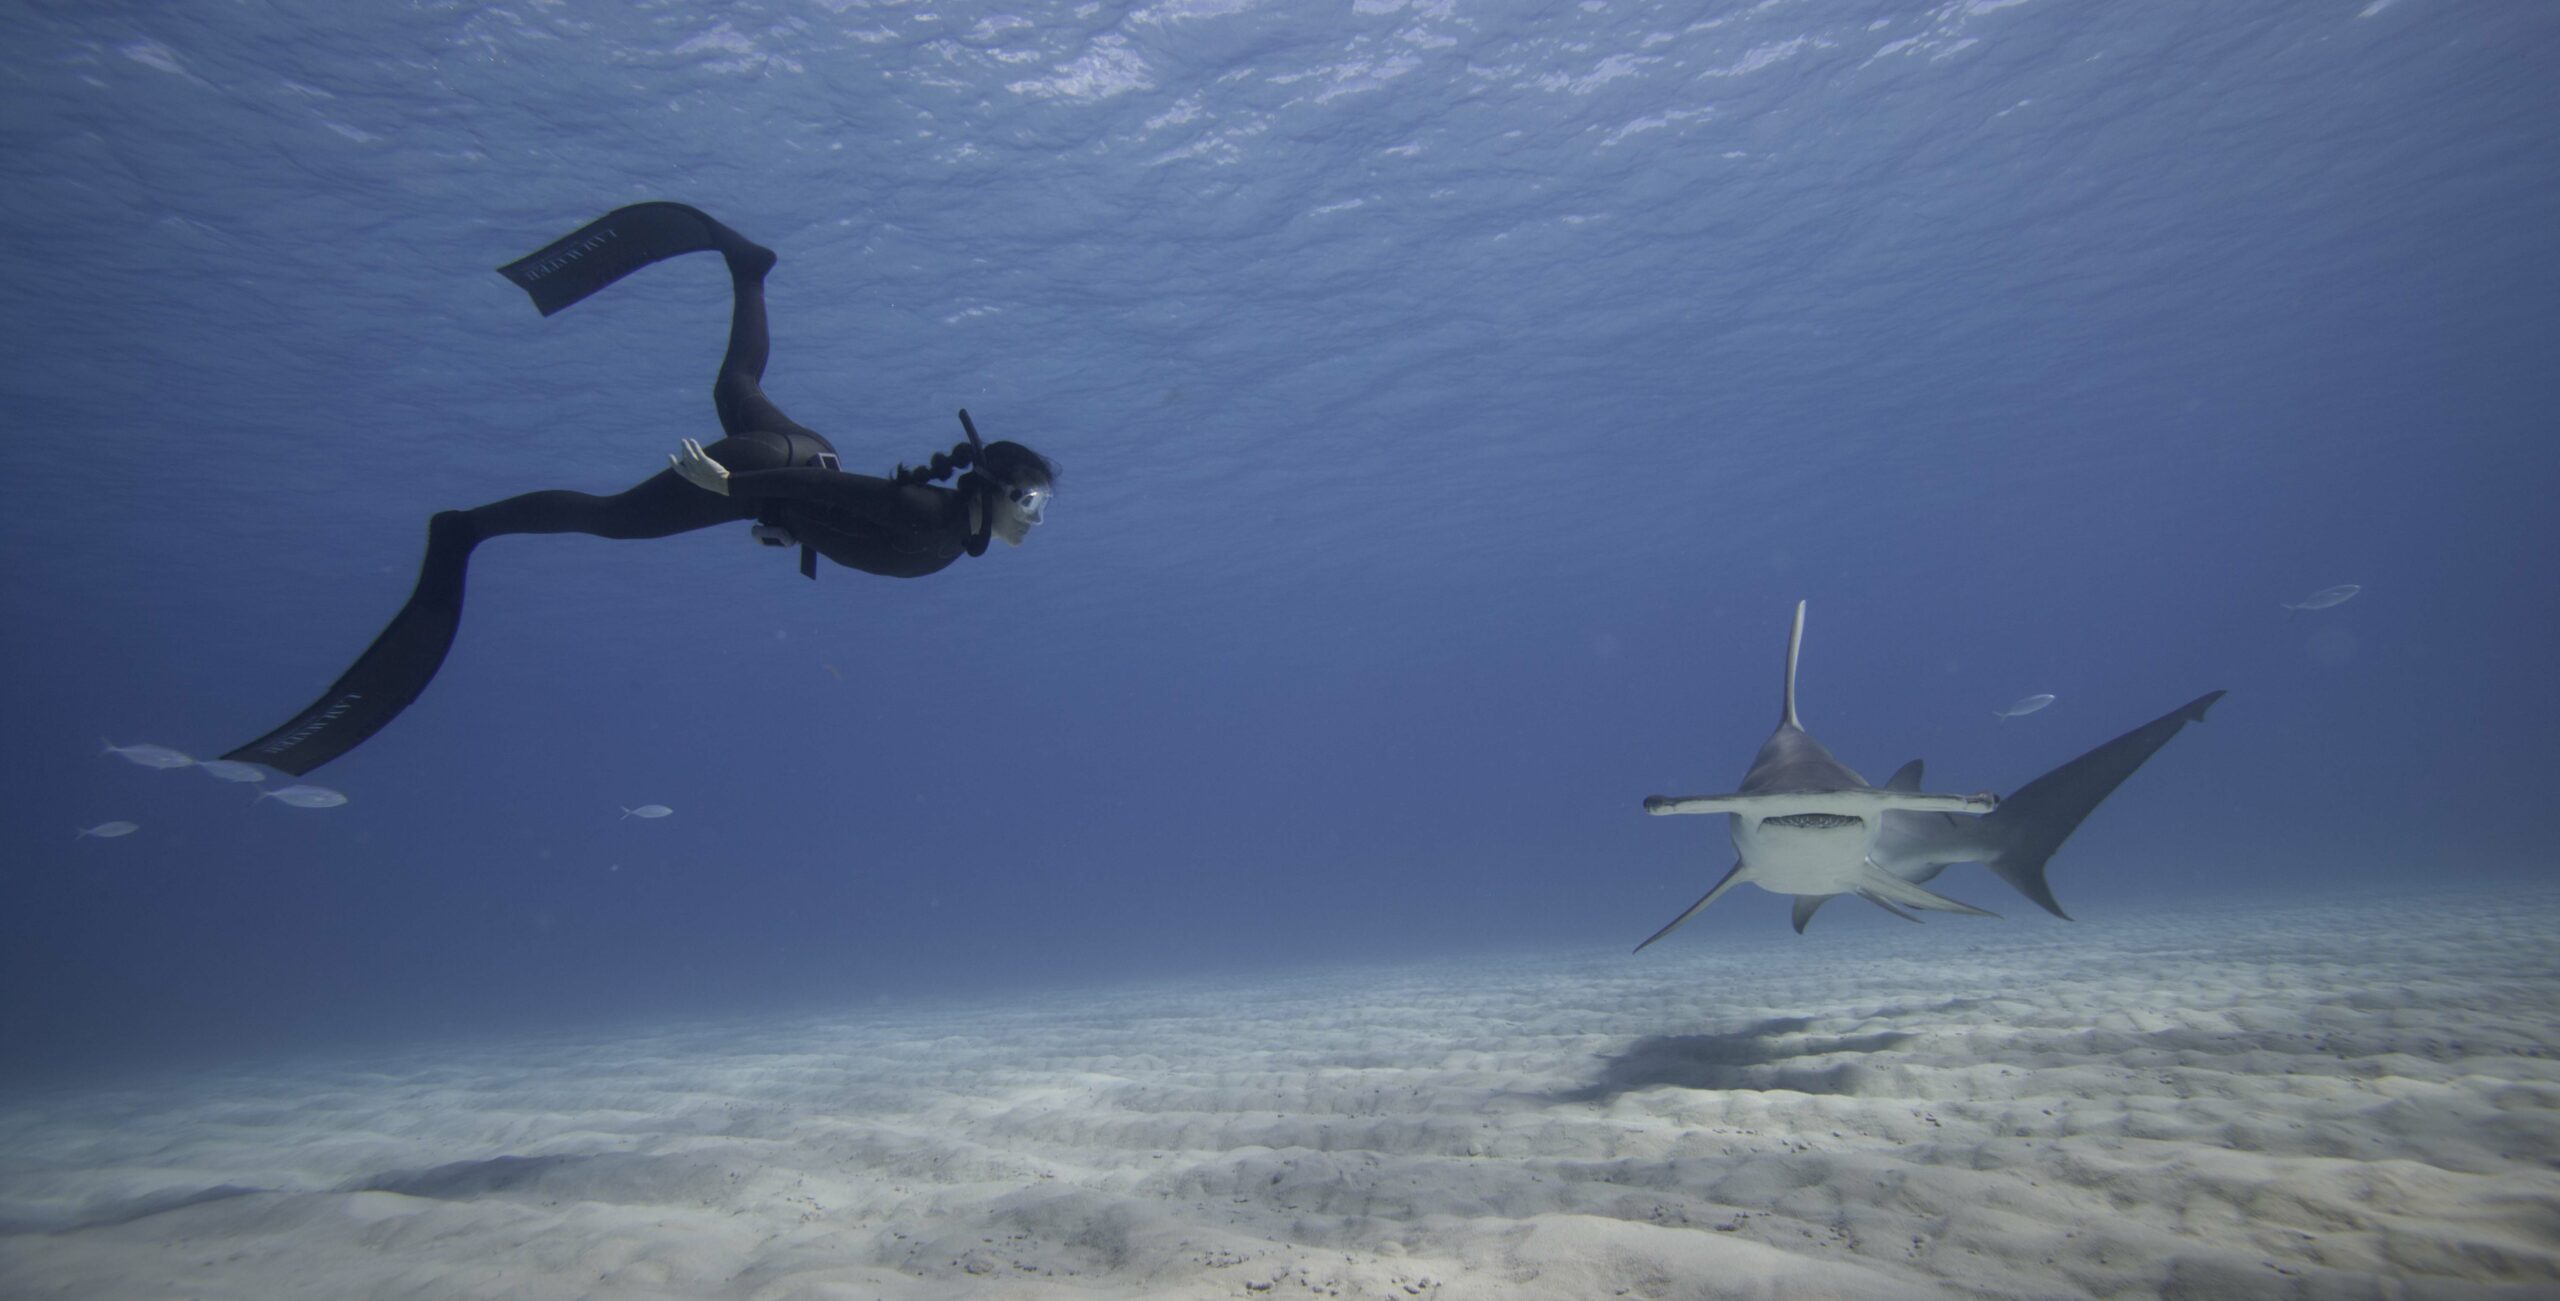 Freediving Q&A With I AM WATER Foundation's Hanli Prinsloo, Hammerhead Shark